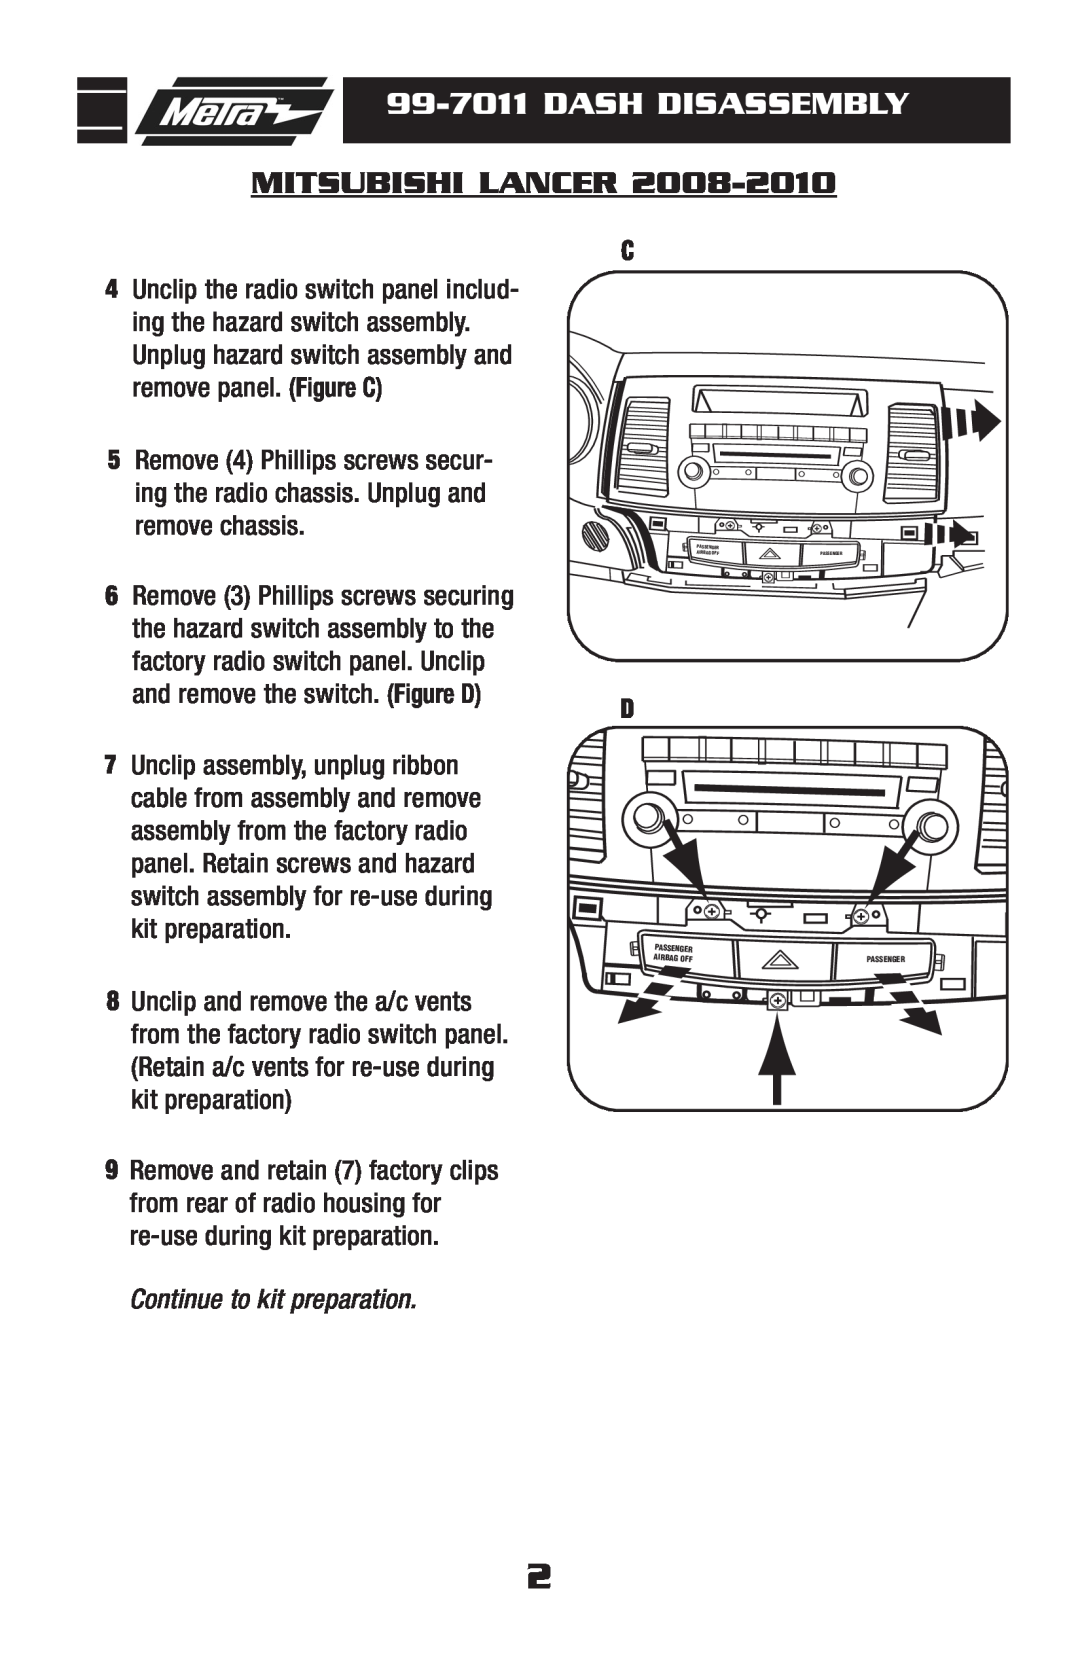 Metra Electronics installation instructions 99-7011DASH DISASSEMBLY, Mitsubishi Lancer, Continue to kit preparation 